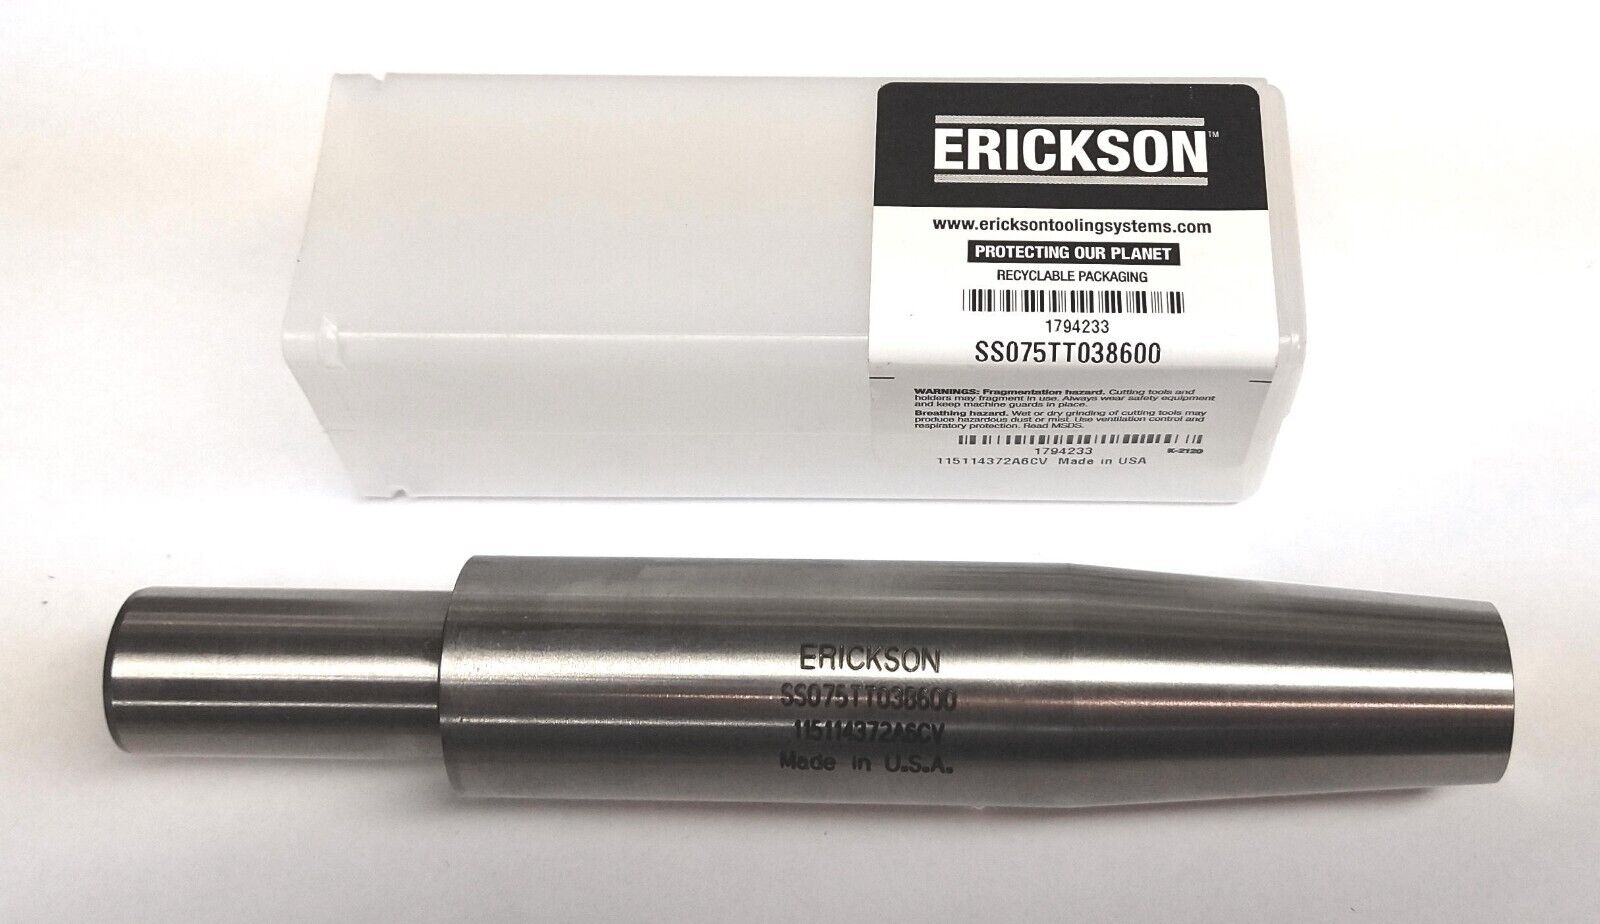 ERICKSON SS075TT038600 Tapping Adapter Coolant Through TAP Shrinker Tool